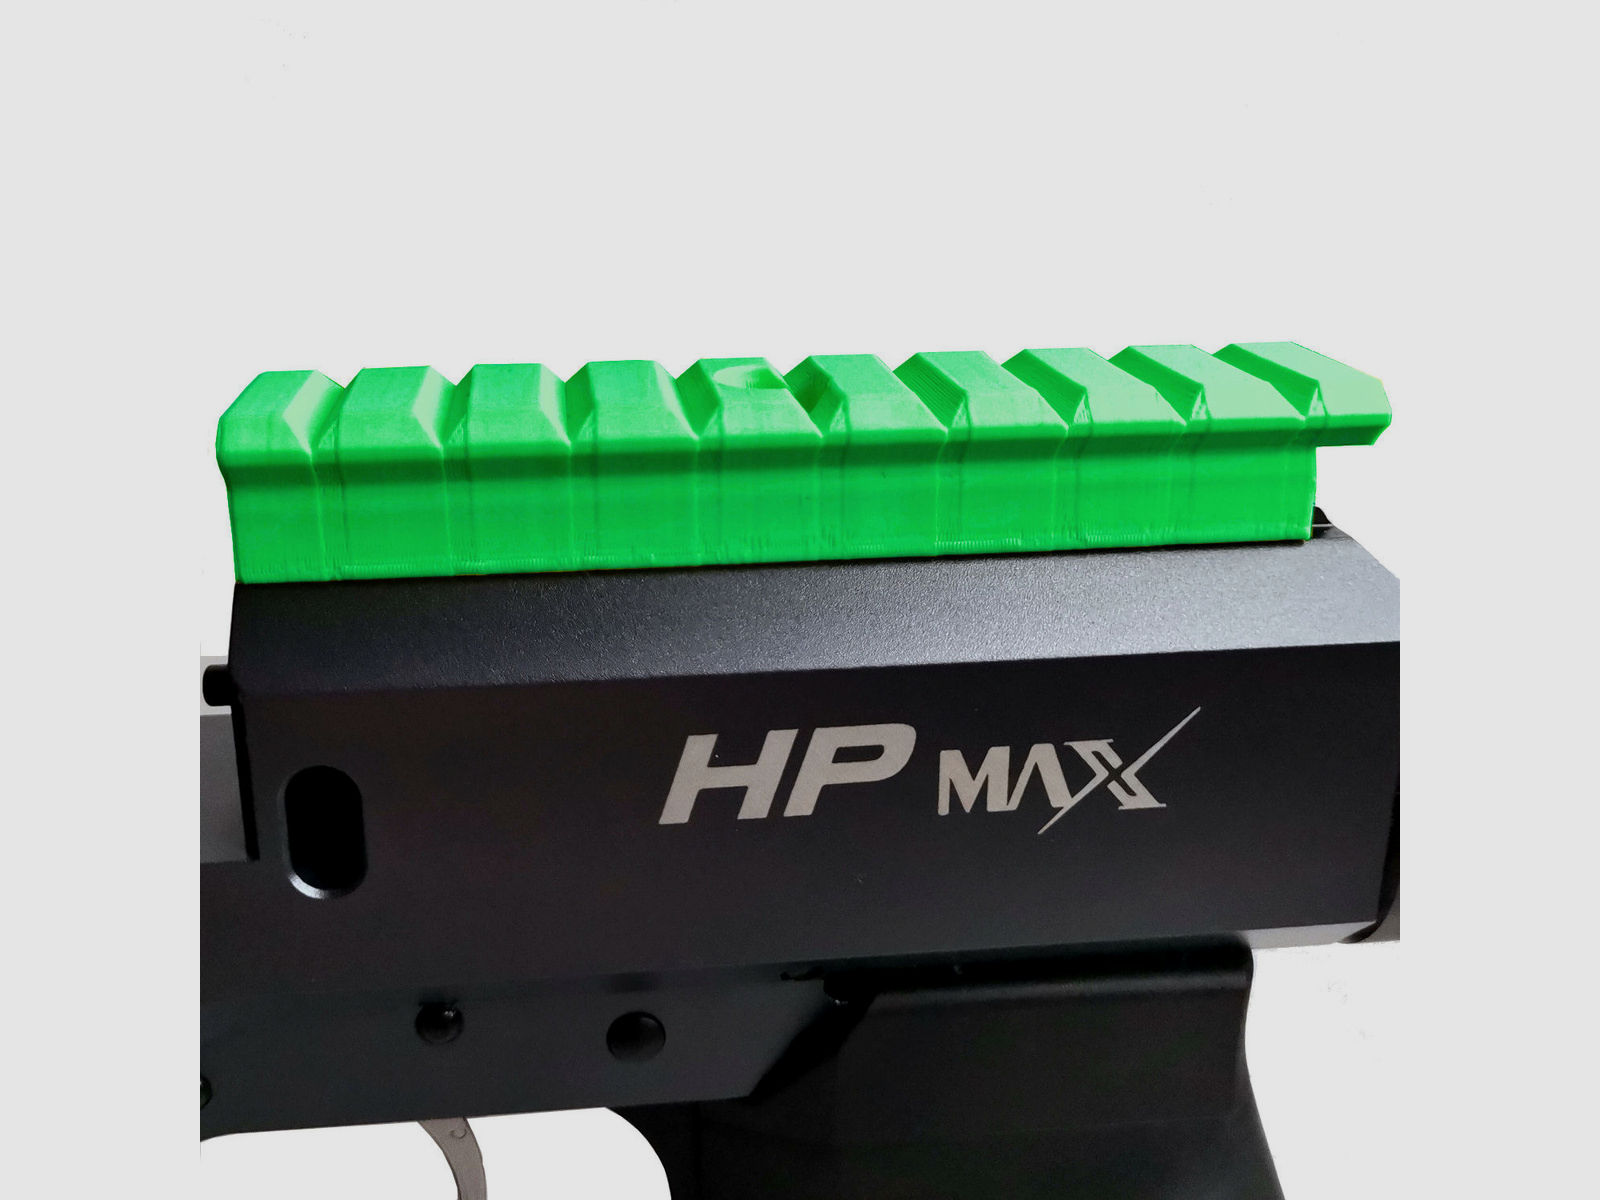 Picatinny Weaver Schiene AEA HPMAX Zielfernrohr HP Max Luftgewehr Optik W021C